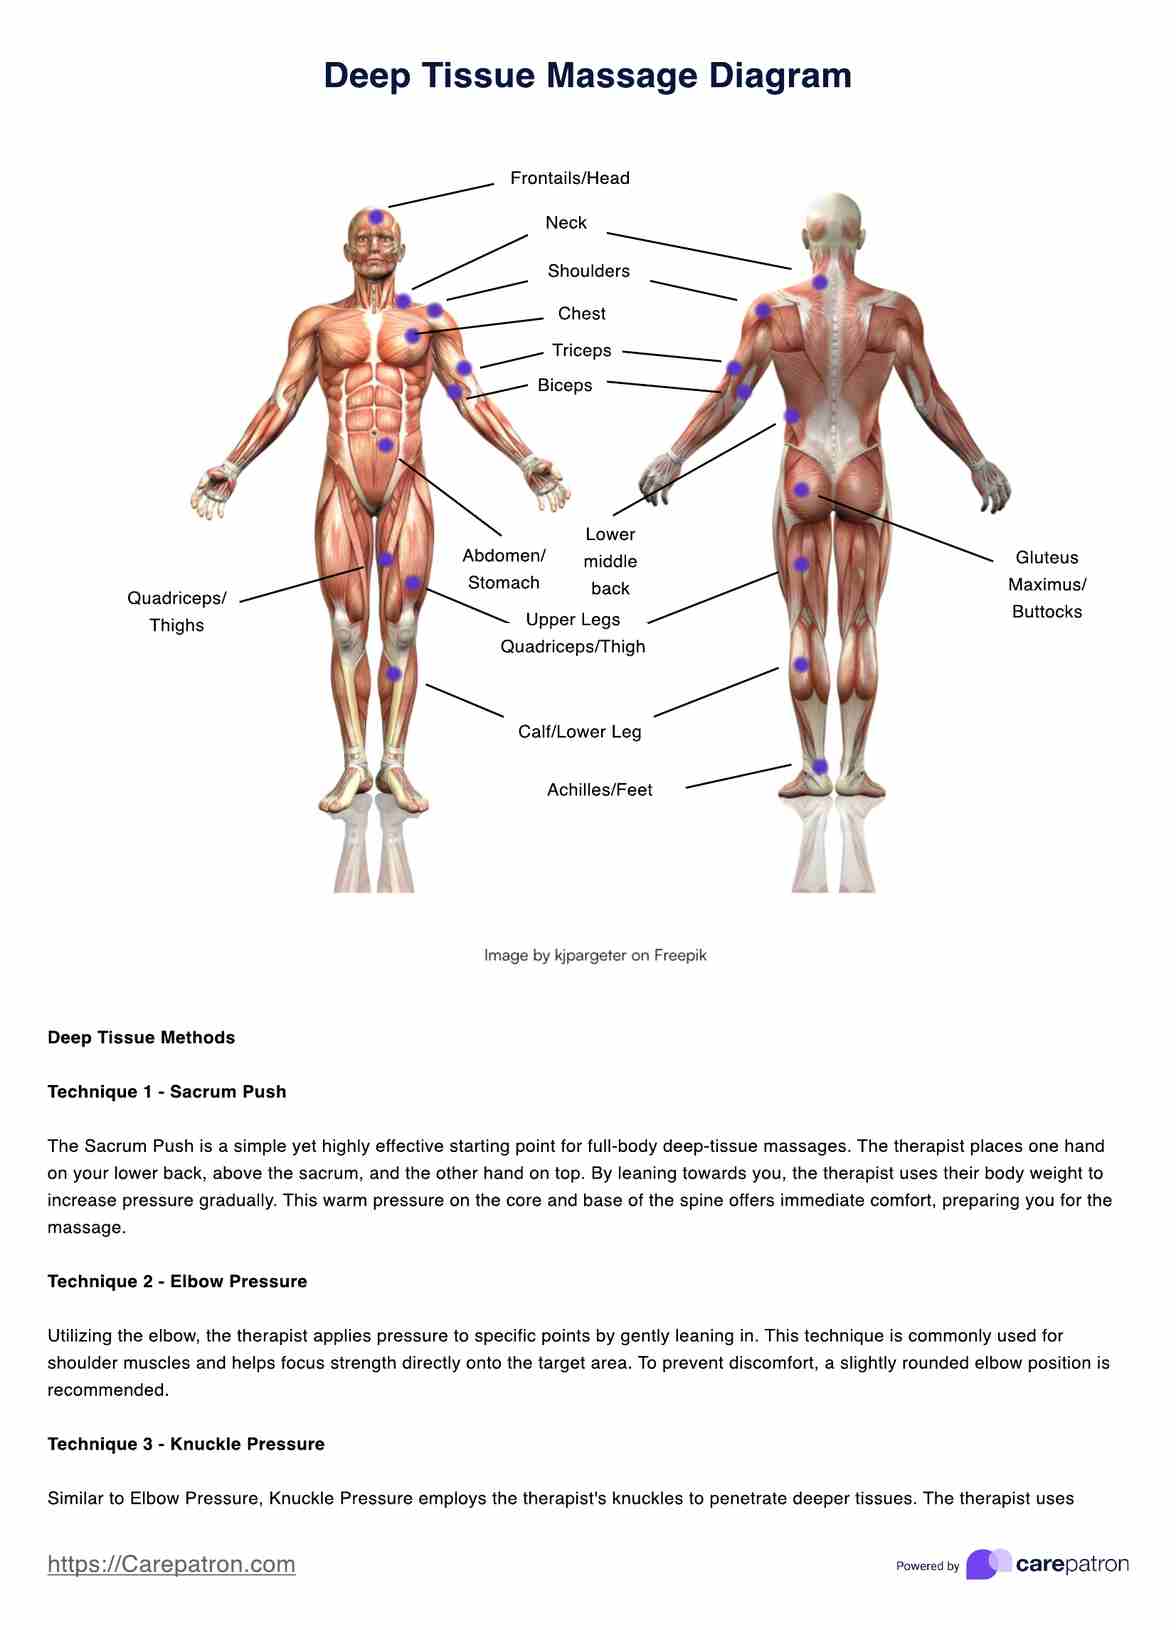 Deep Tissue Massage Diagrams PDF Example